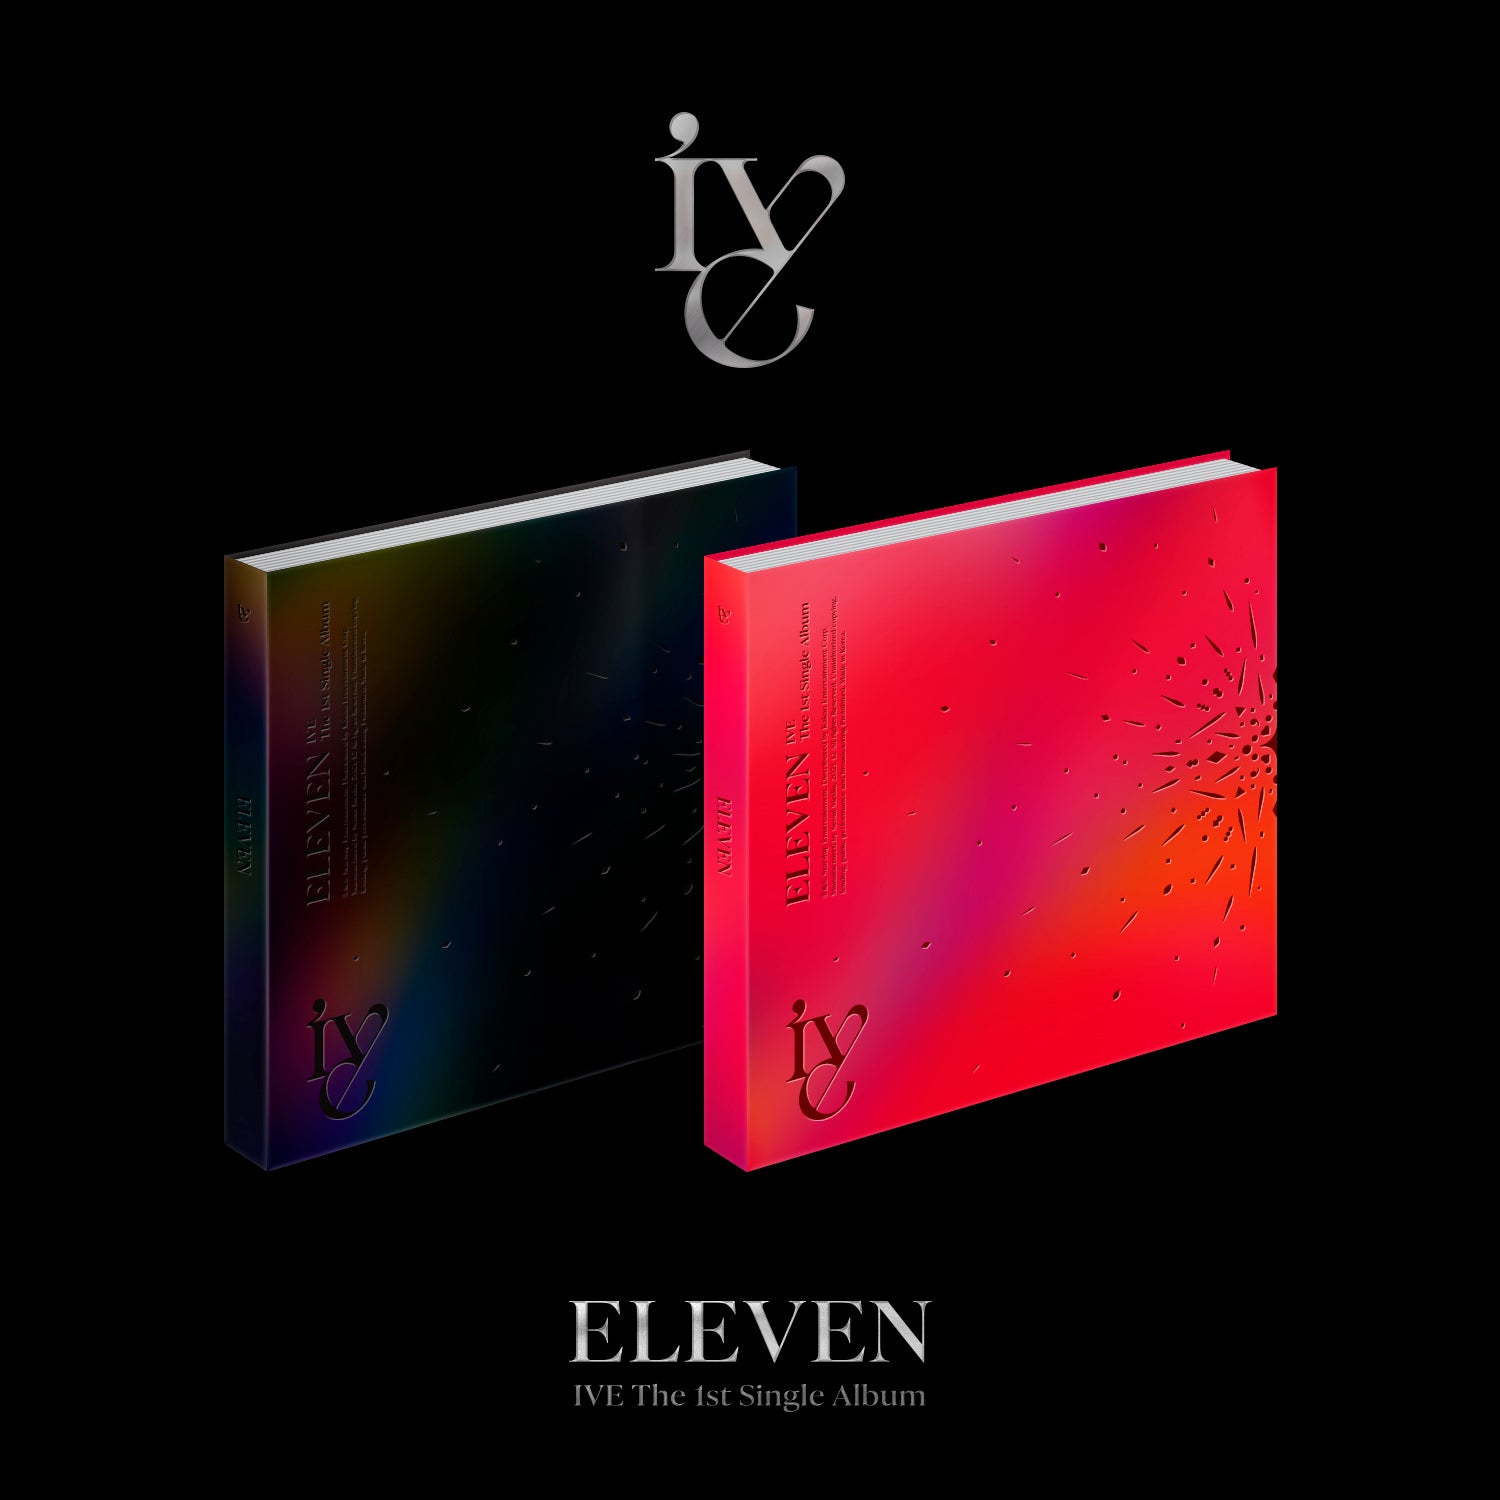 IVE 1ST SINGLE ALBUM 'ELEVEN' set cover